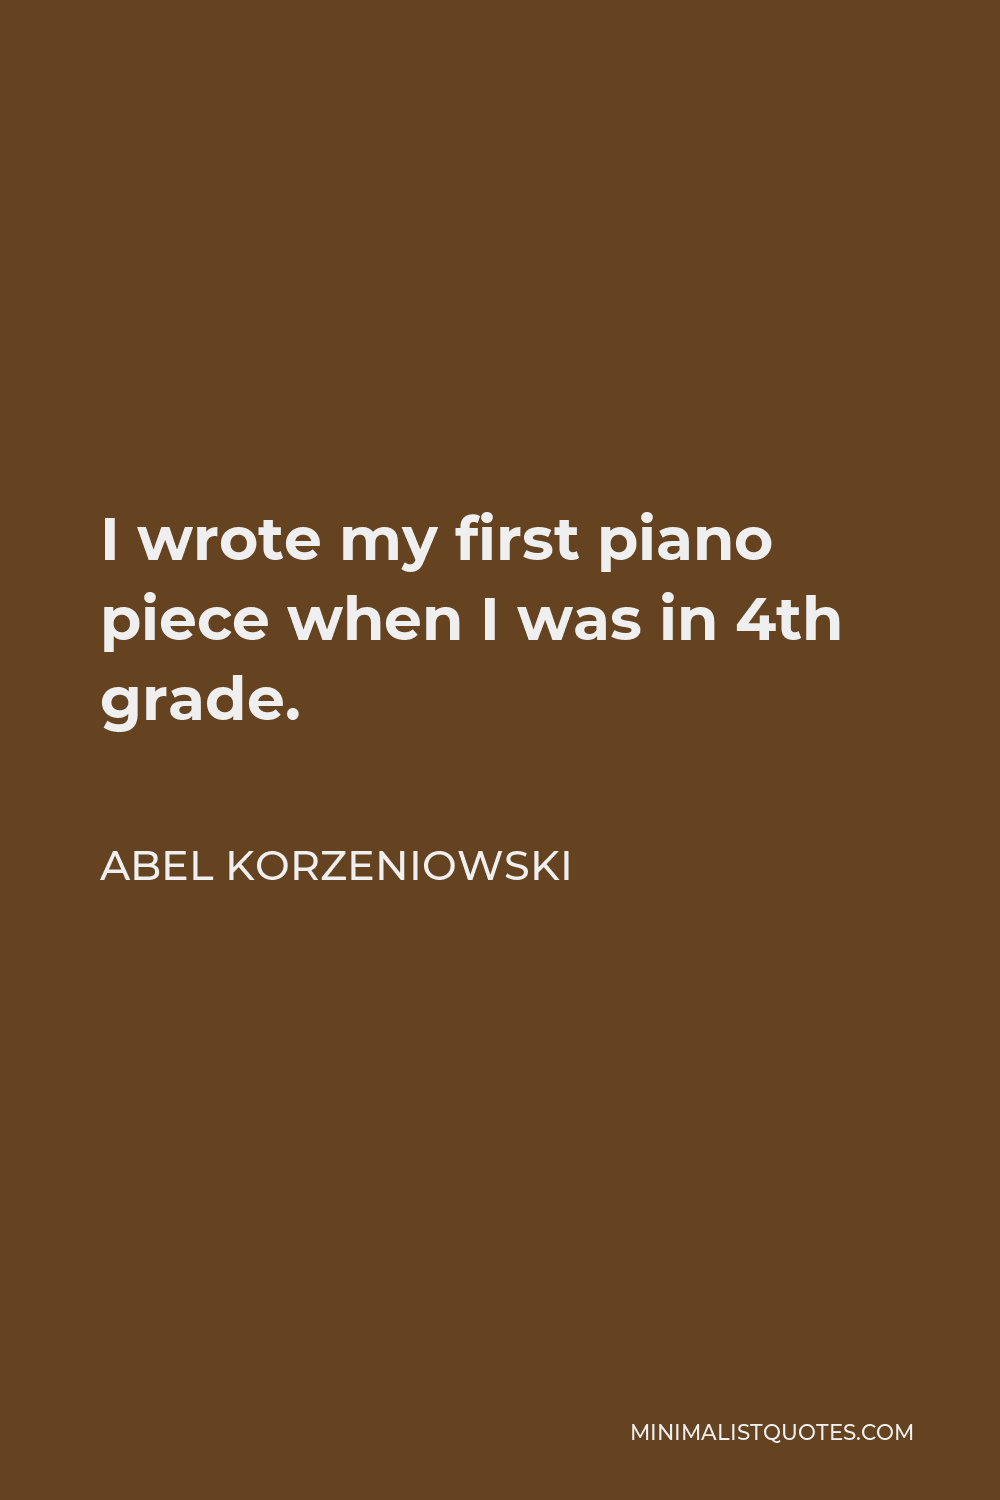 Abel Korzeniowski Quote - I wrote my first piano piece when I was in 4th grade.